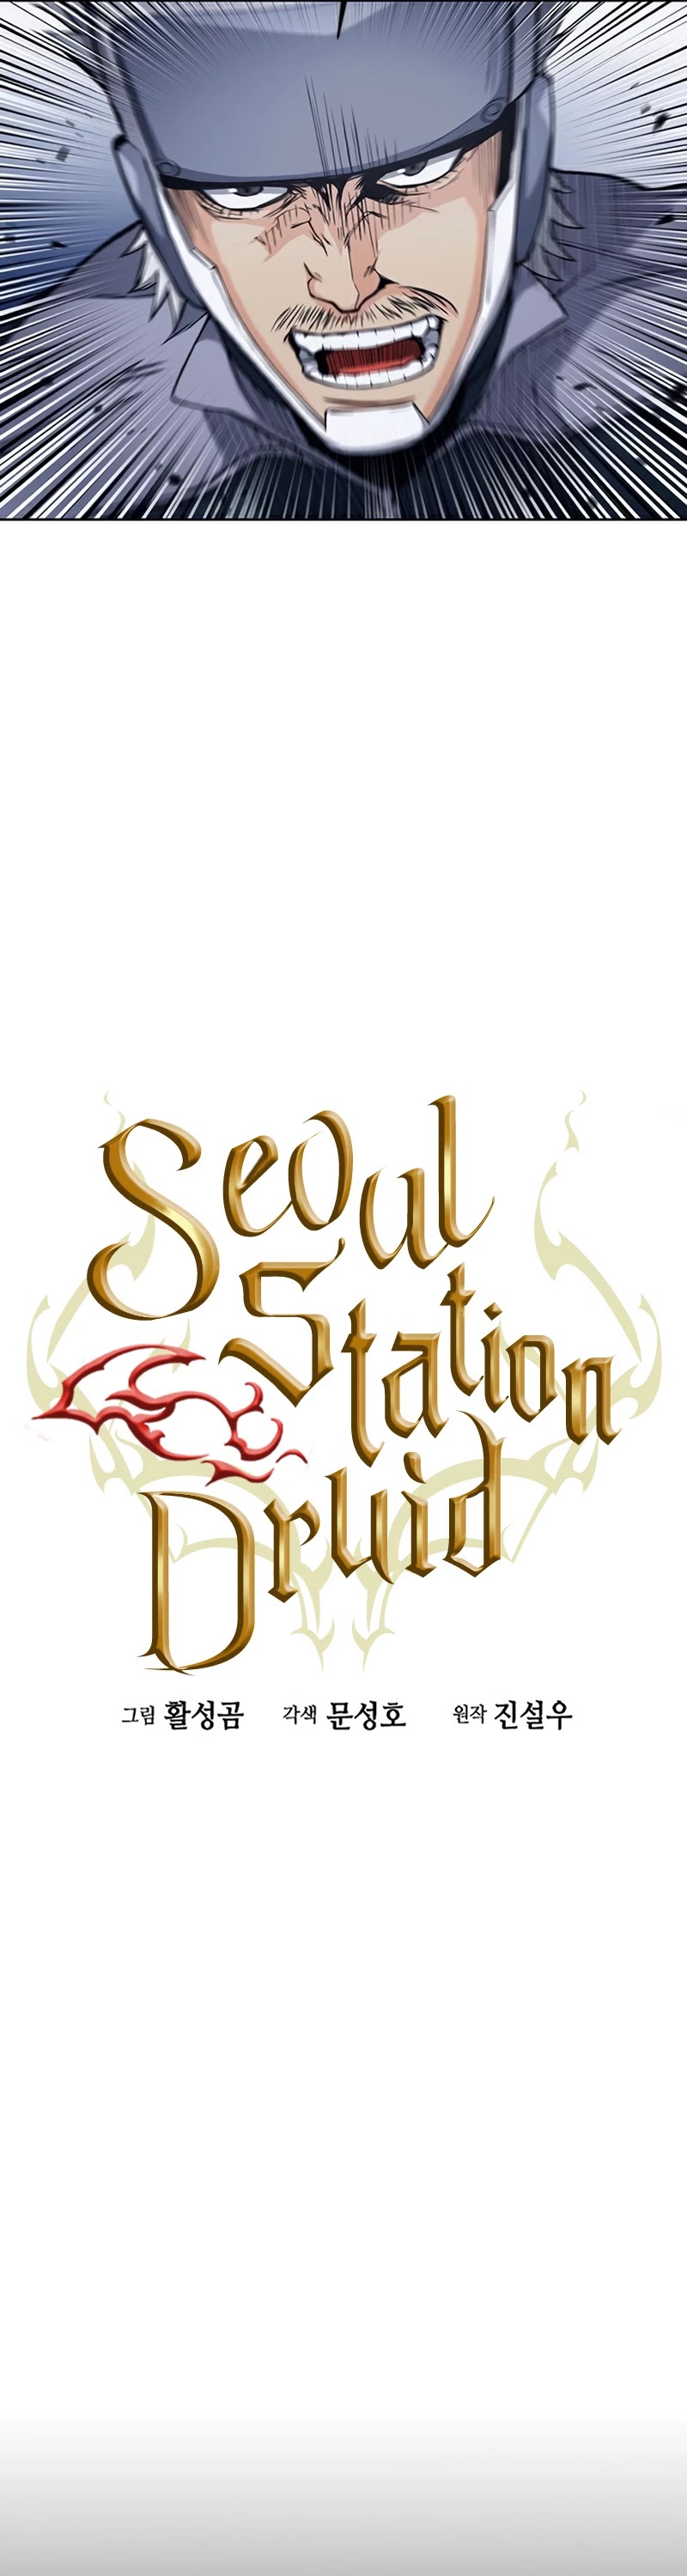 Seoul Station Druid, Seoul Station Druid manga